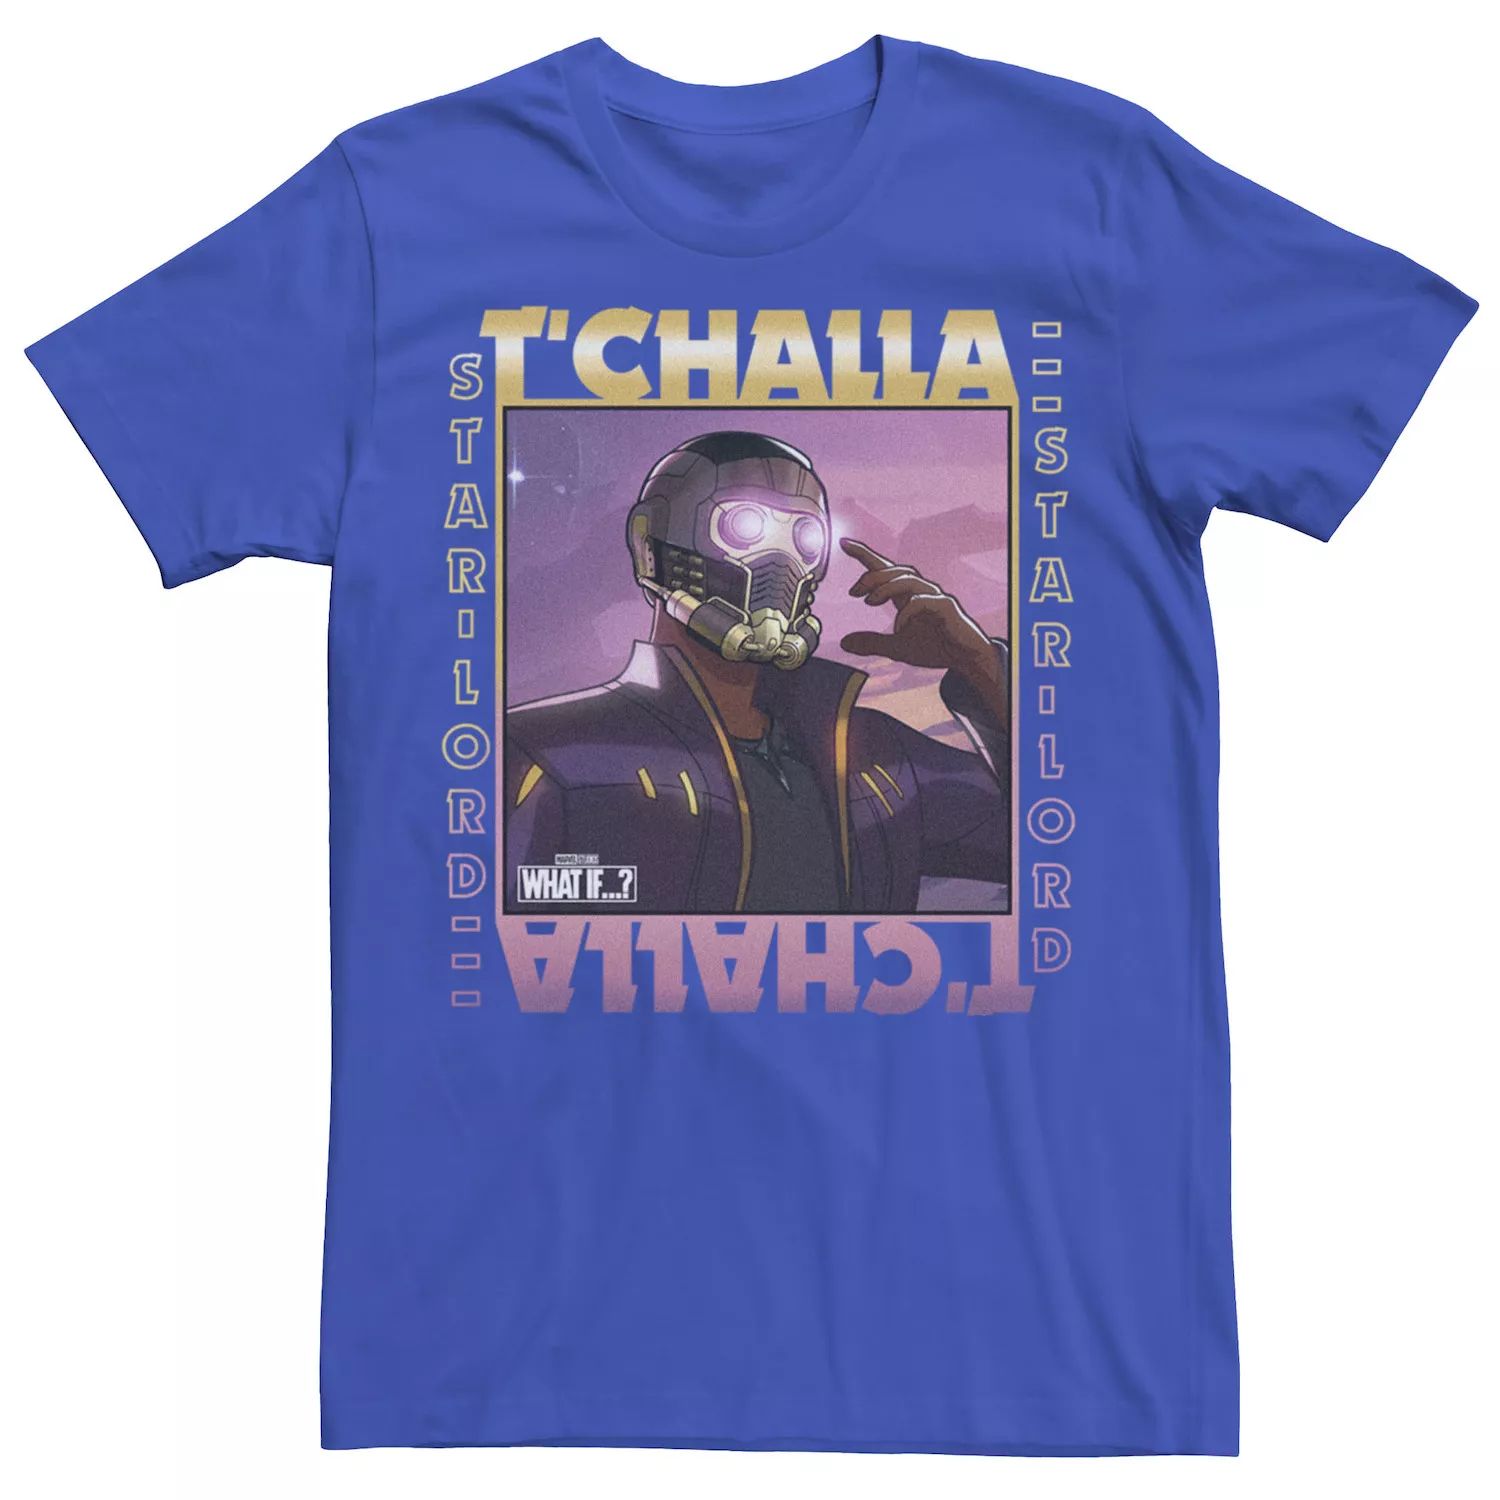 

Мужская футболка с плакатом Marvel What If T'Challa Star Lord Licensed Character